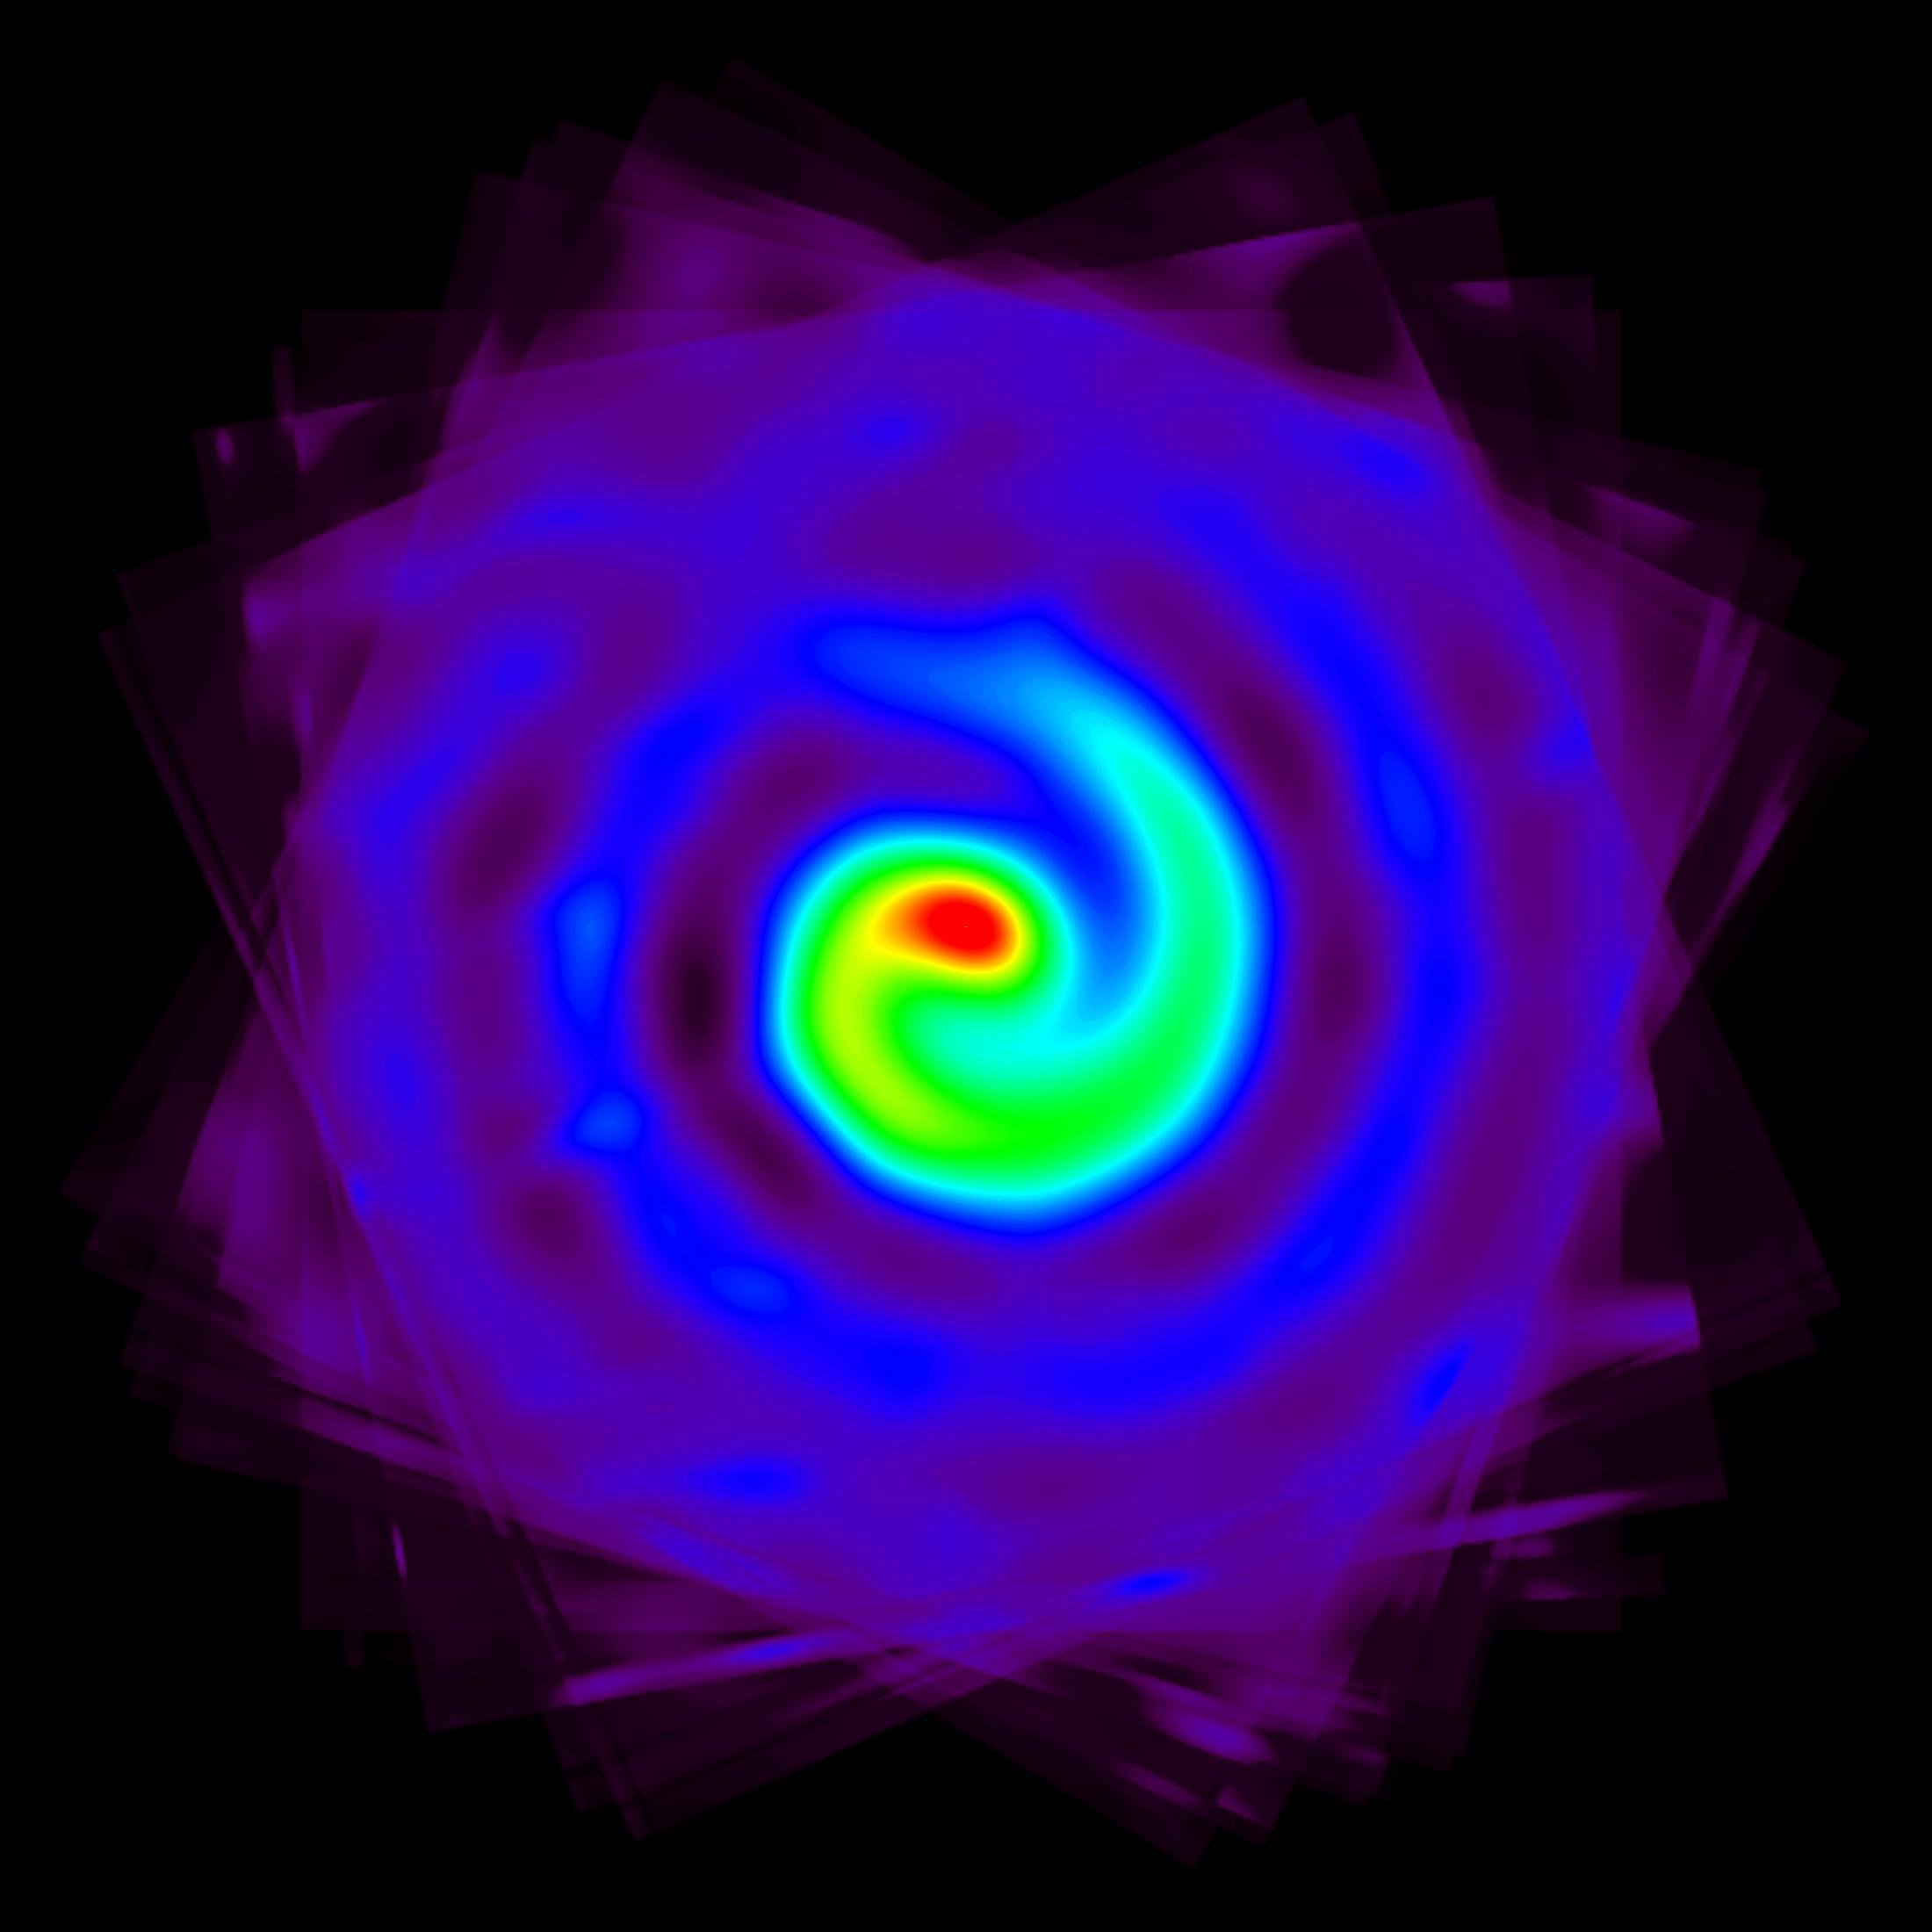 WR 104: A Pinwheel Star System